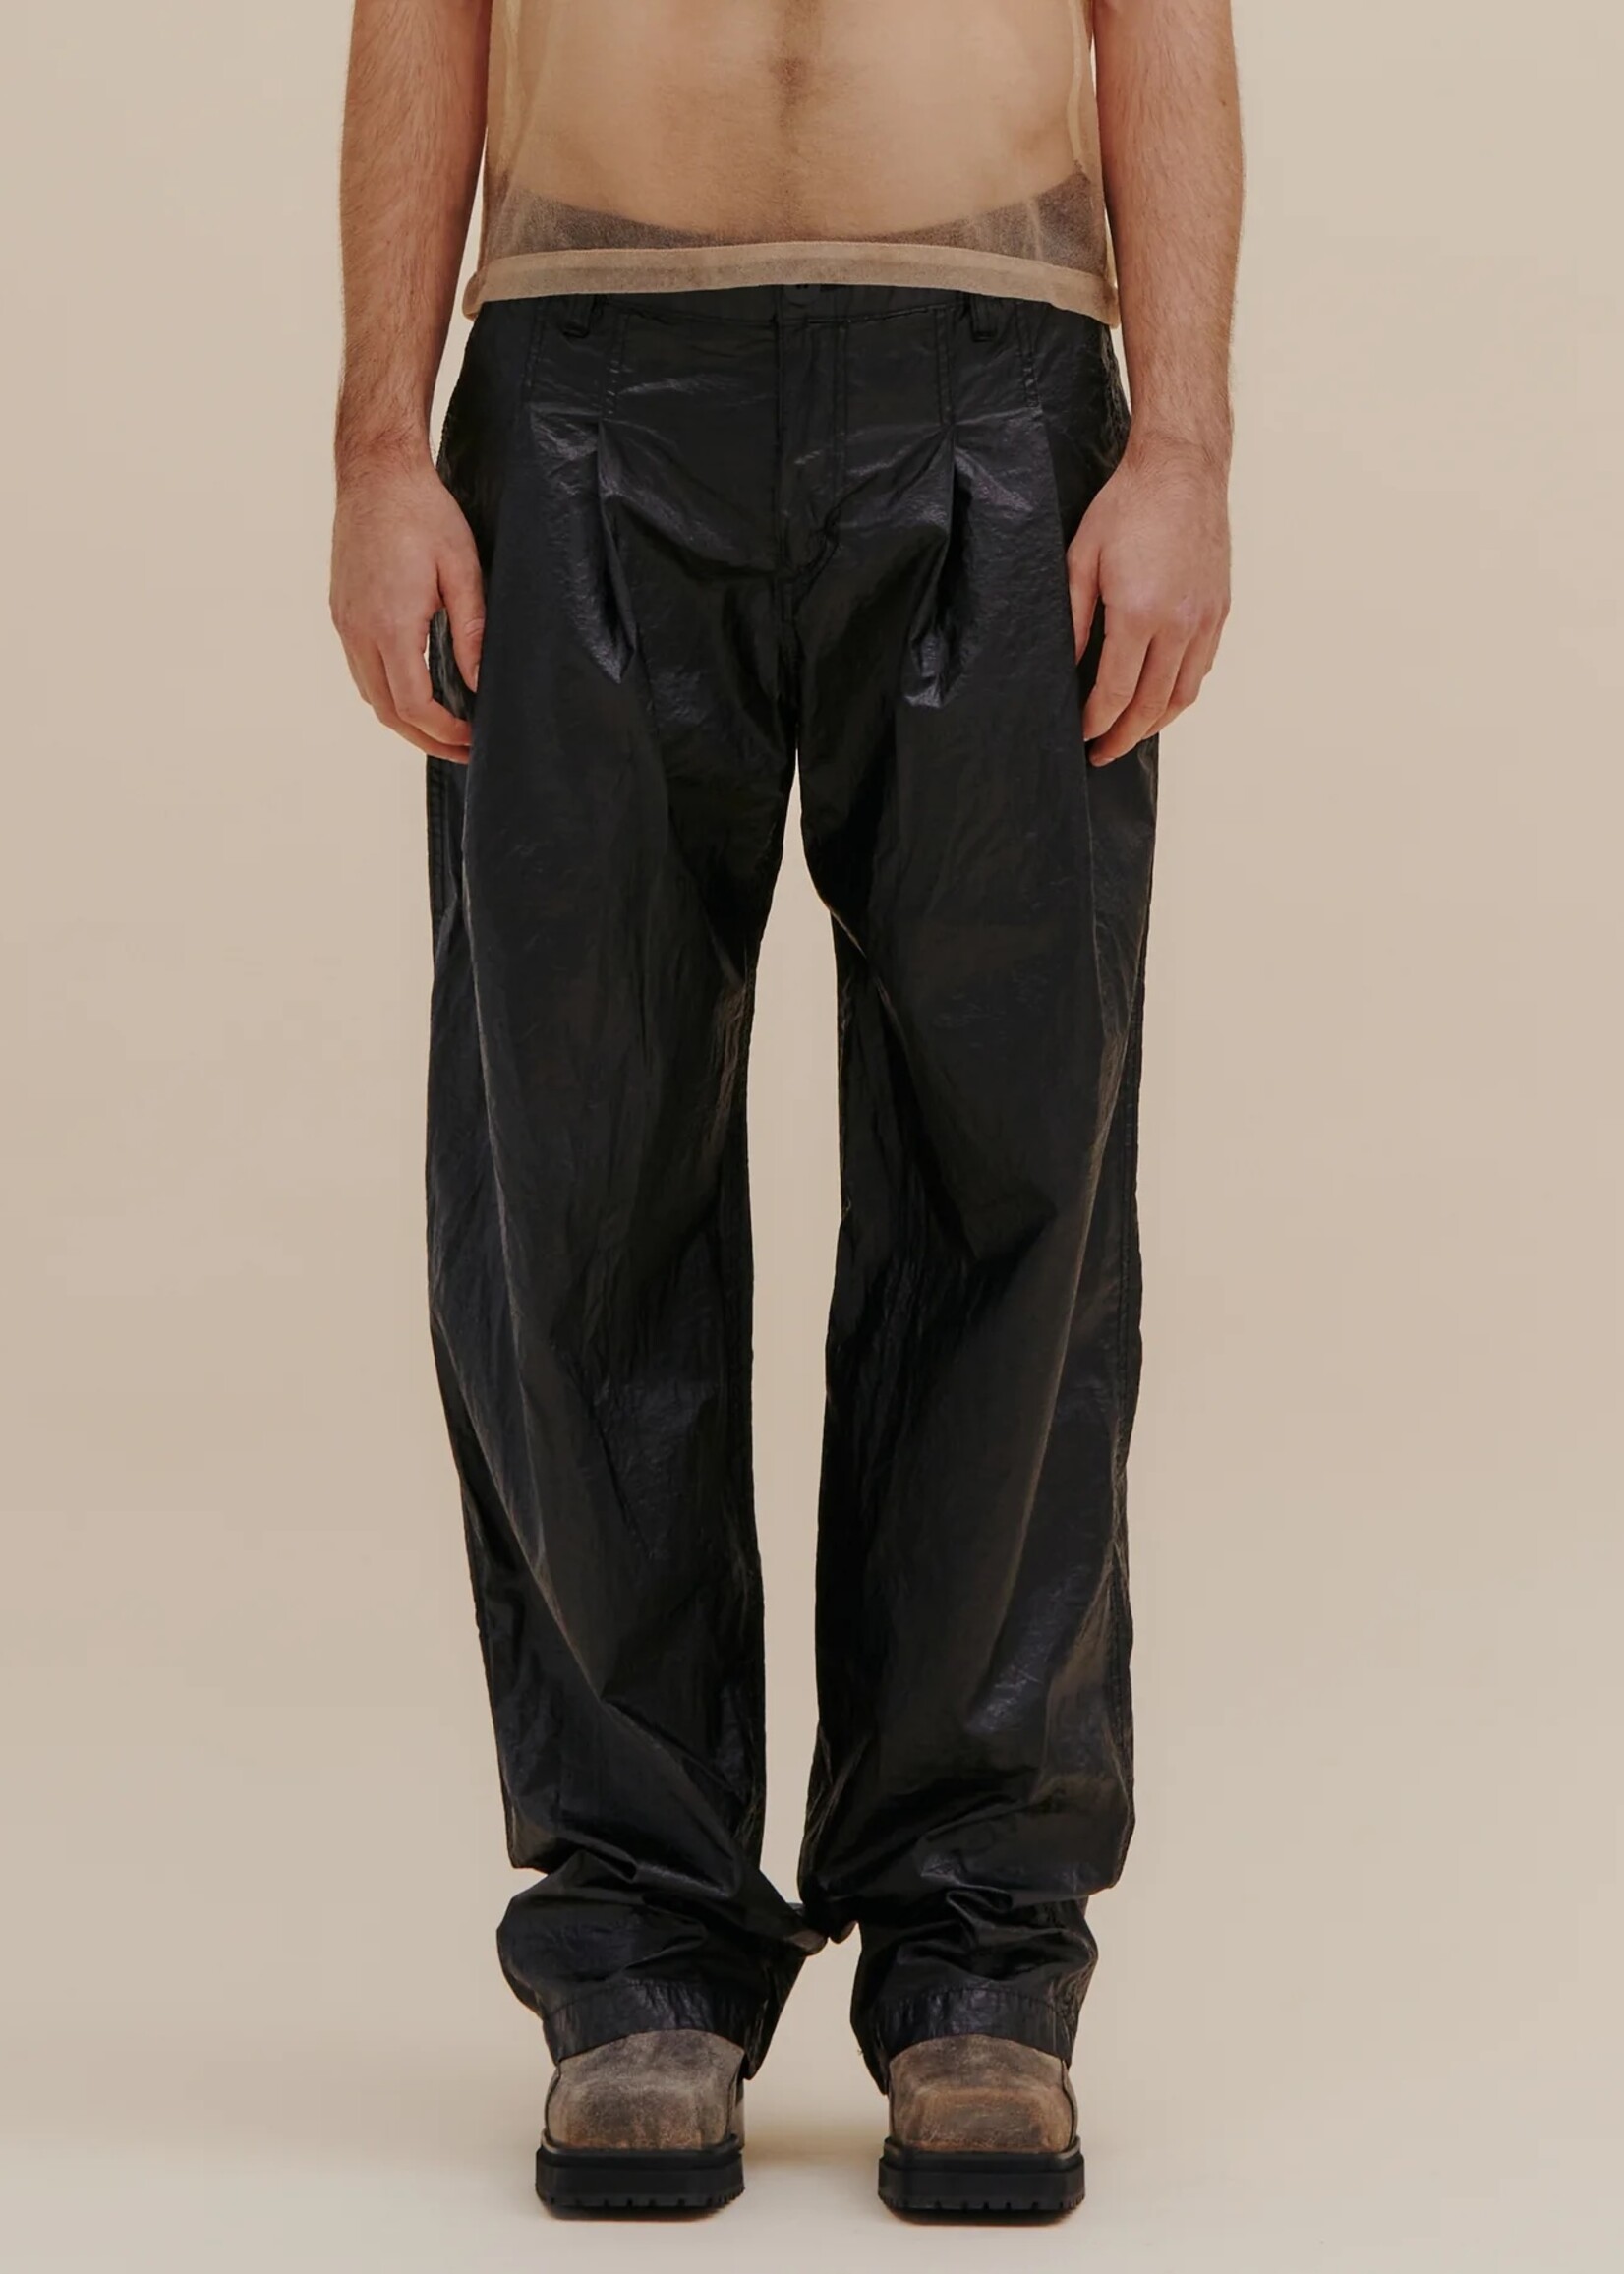 ECKHAUS LATTA Nylon Pleated Trouser in Obsidian